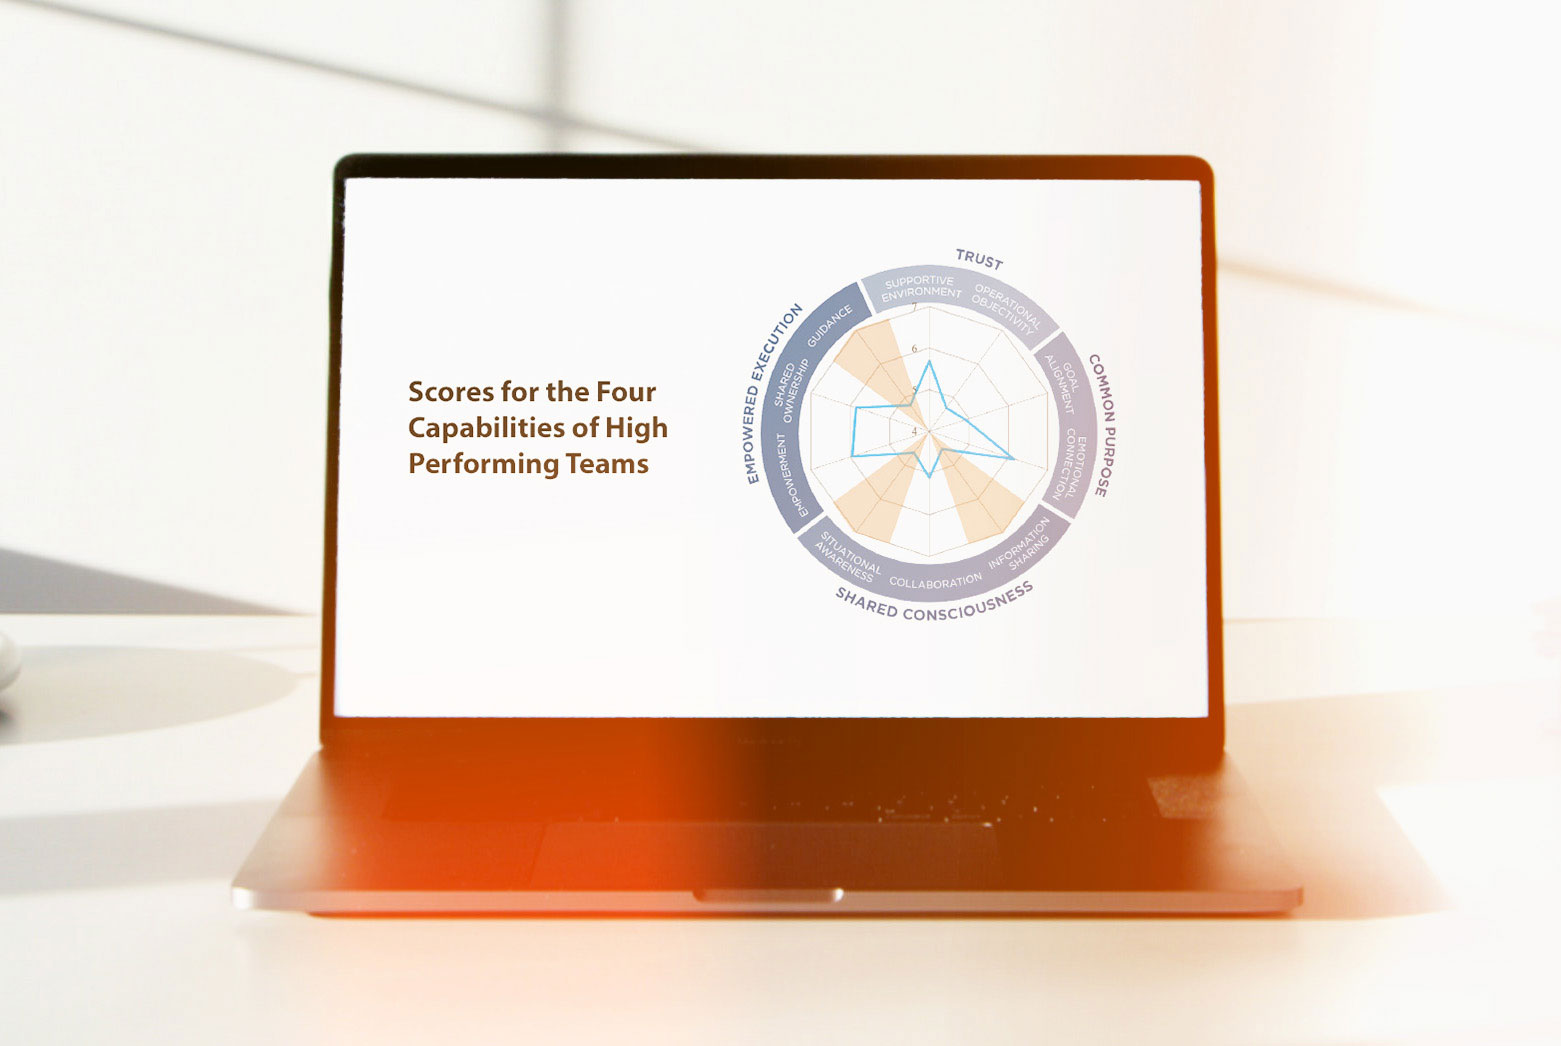 Example of Performance Analysis